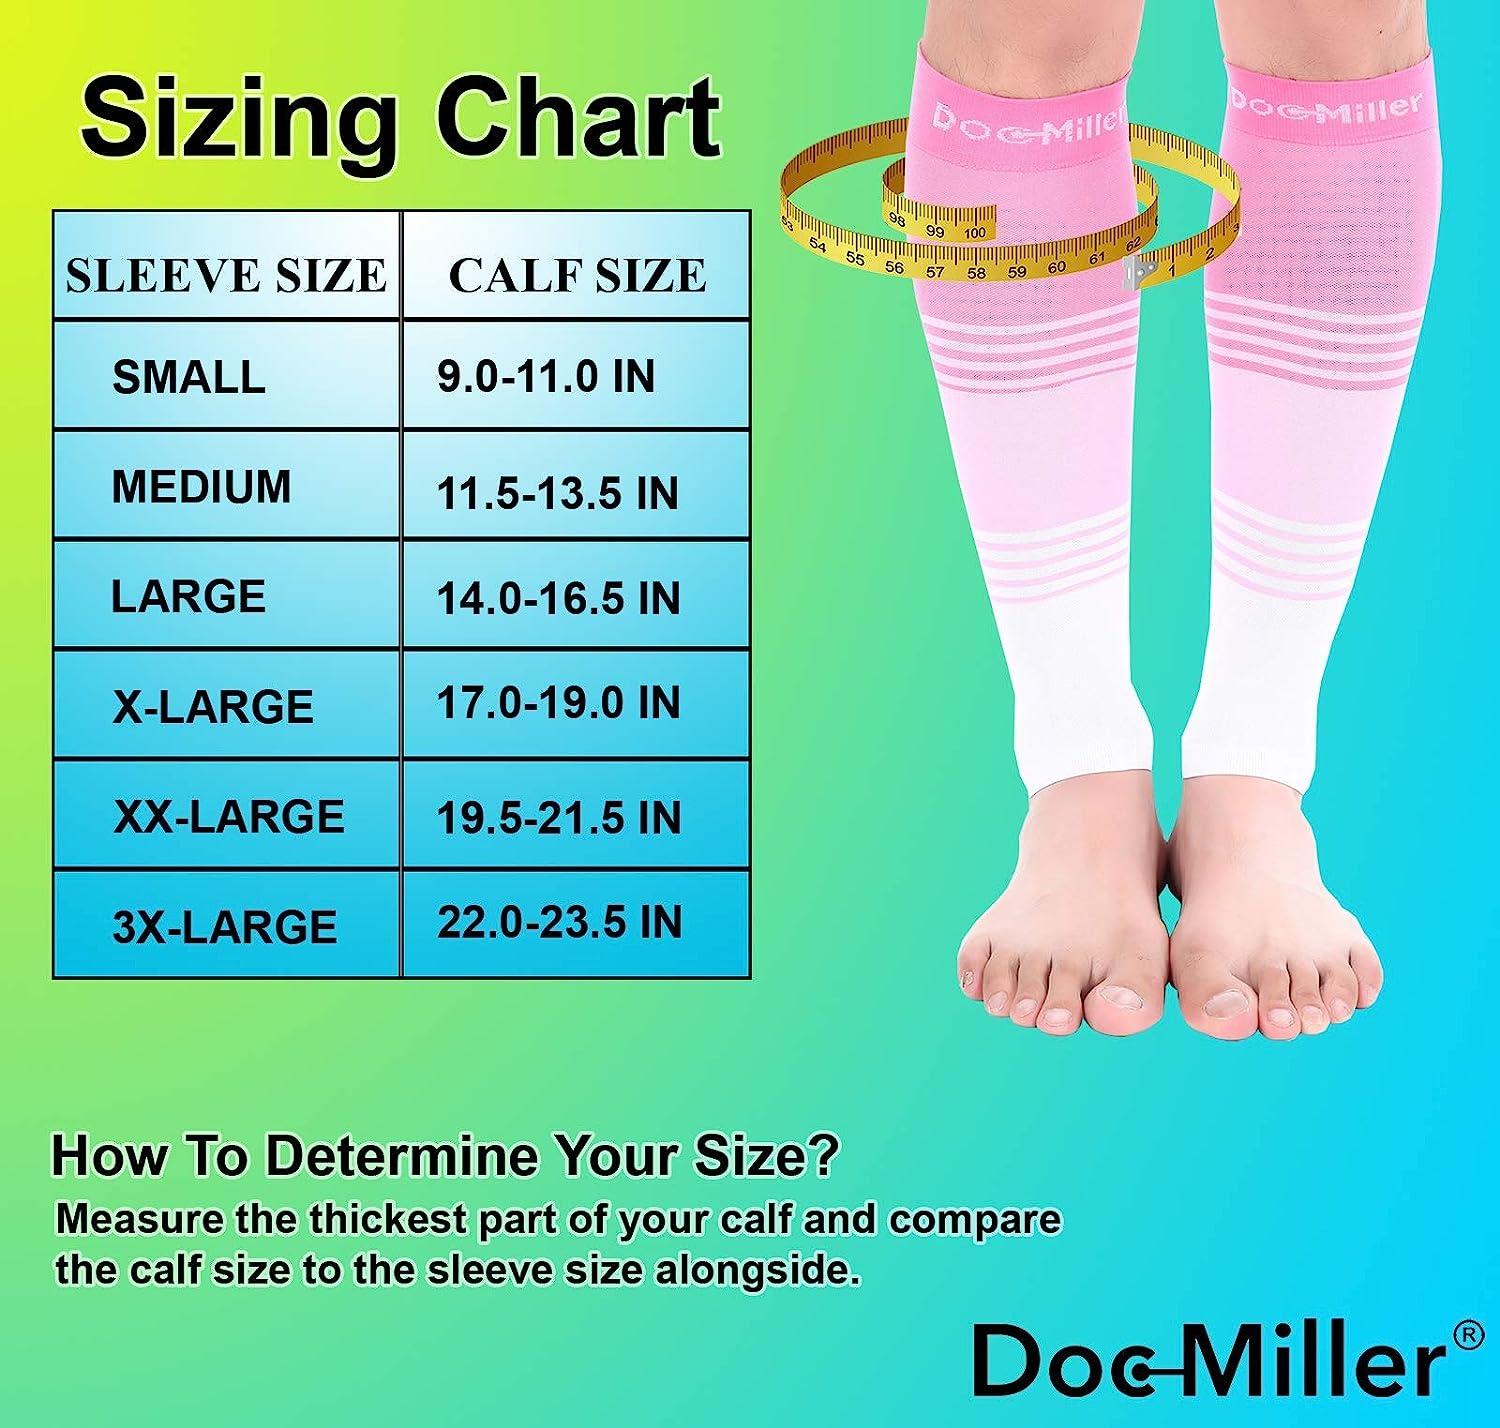 Doc Miller Open Toe Compression Socks Women and Men 20-30mmHg